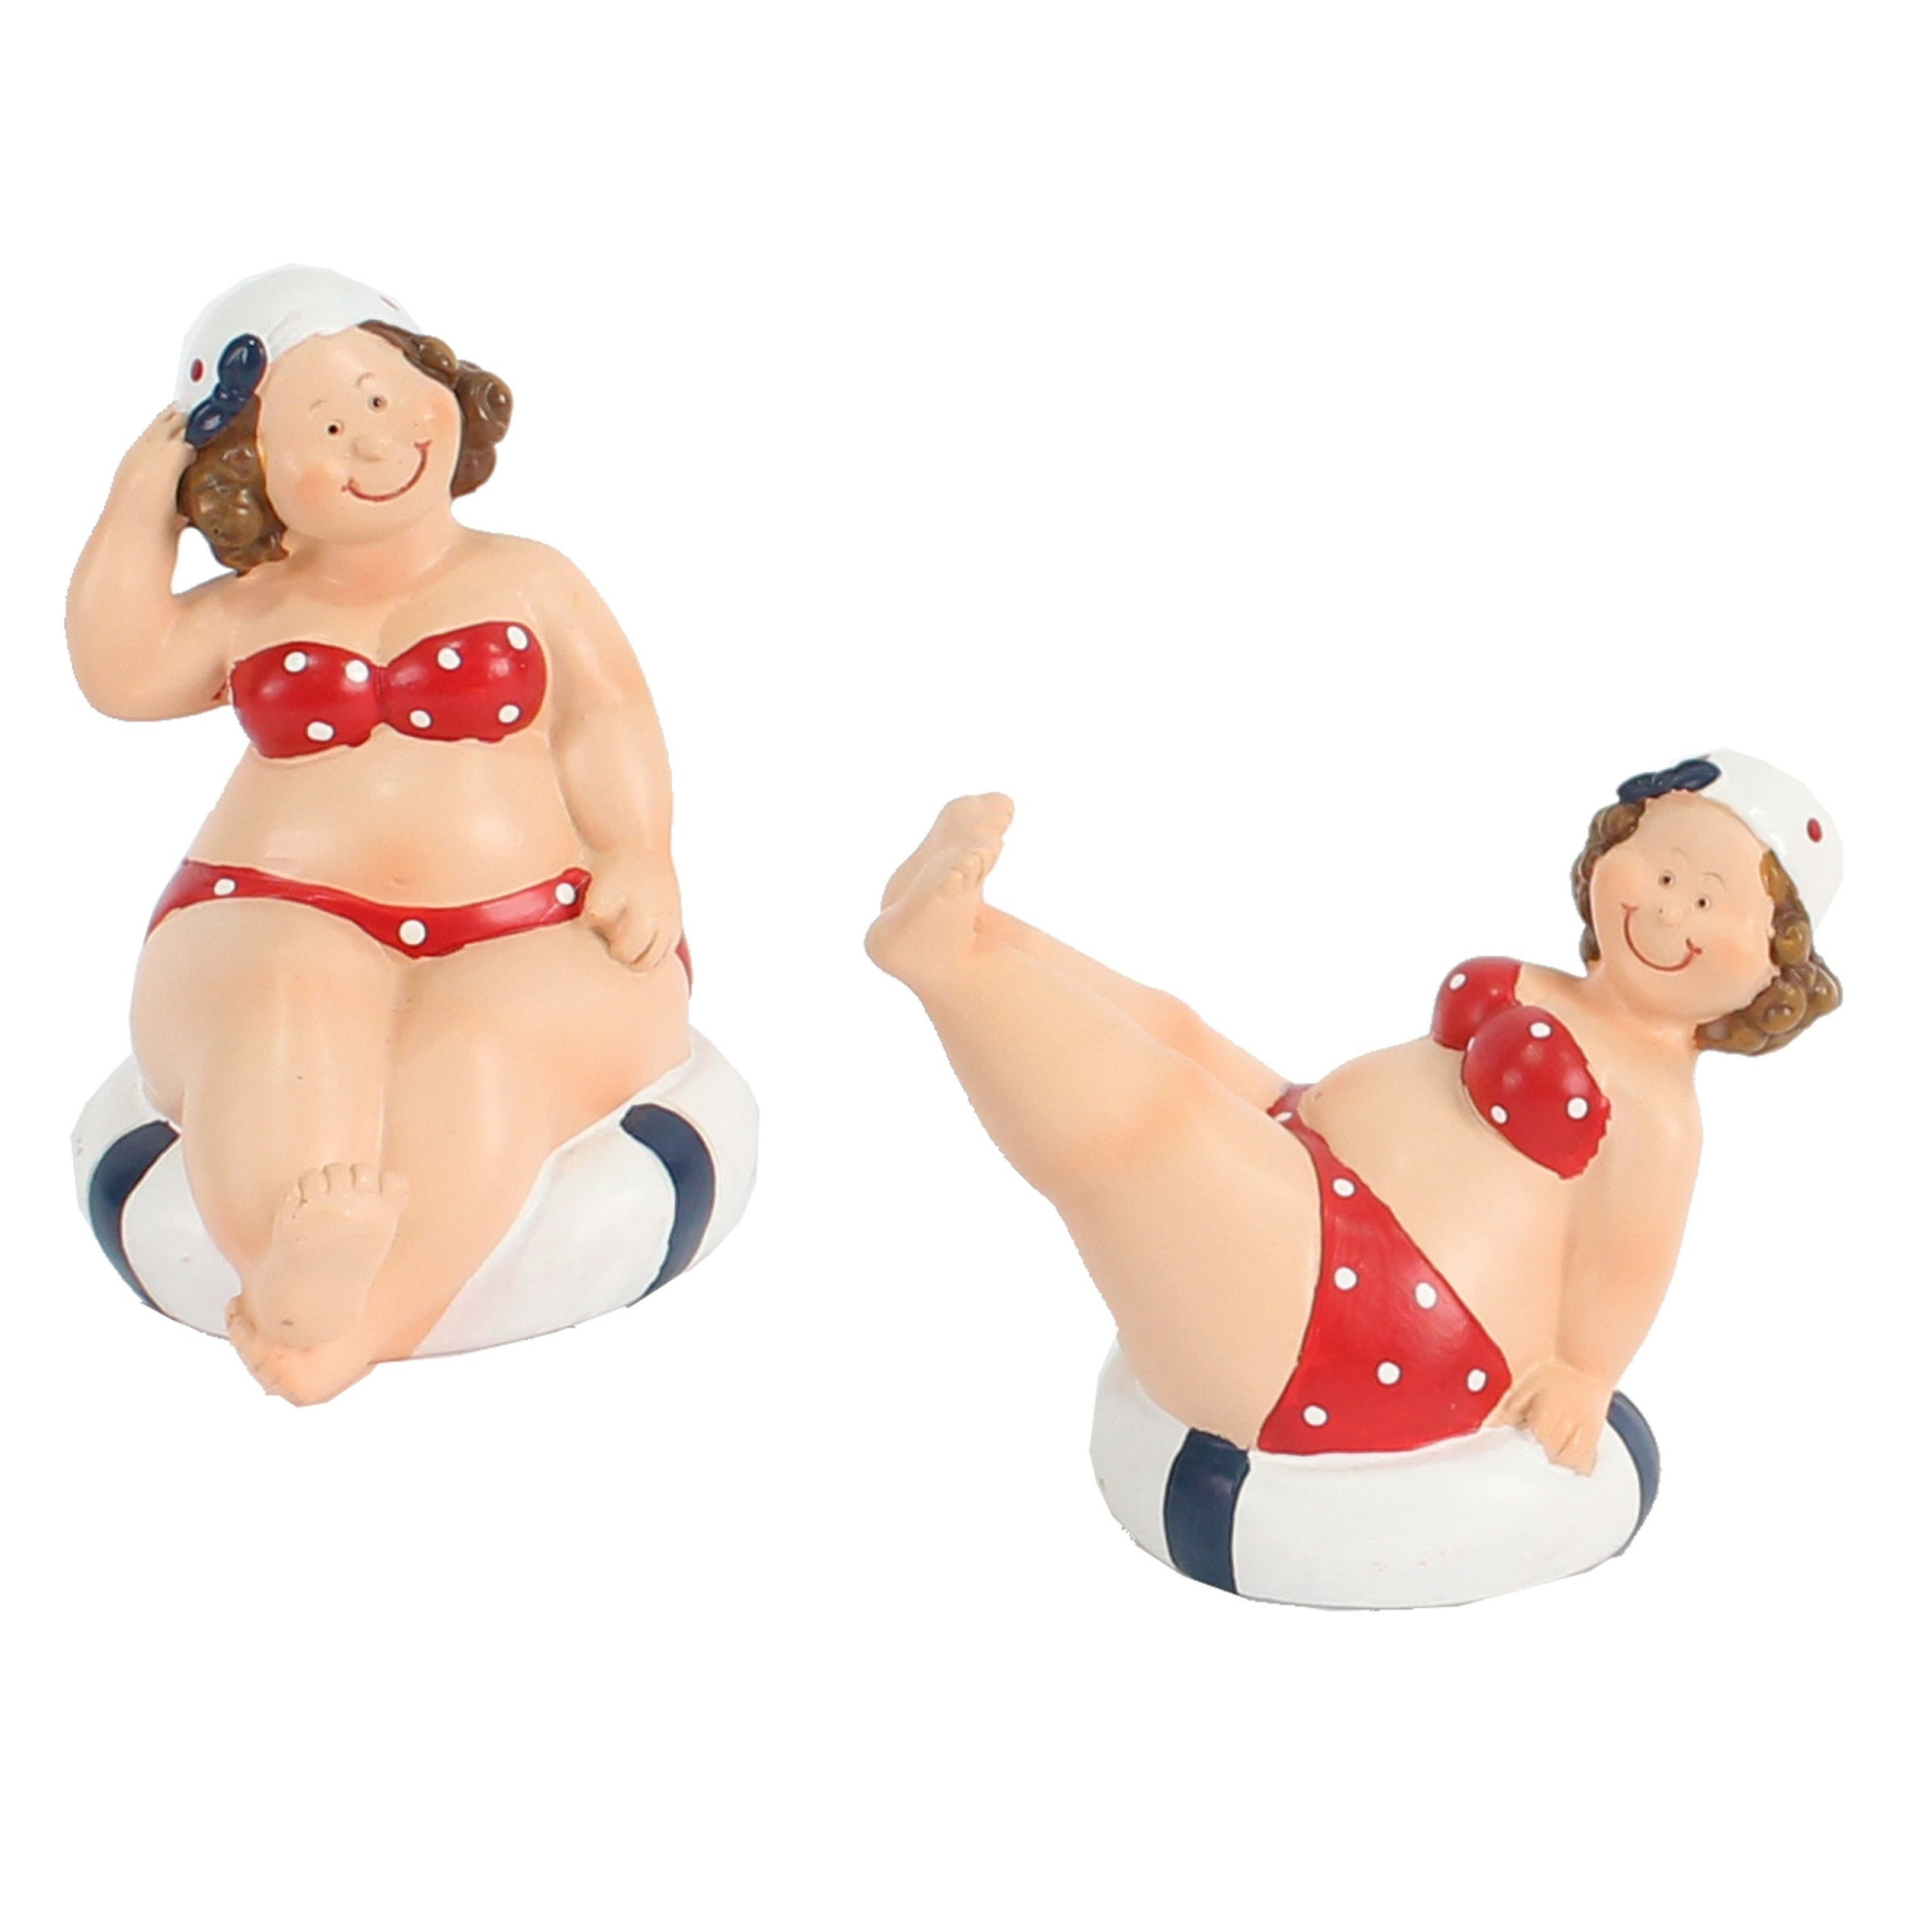 Woonkamer decoratie beeldjes set van 2 dikke dames rood badpak 10 cm